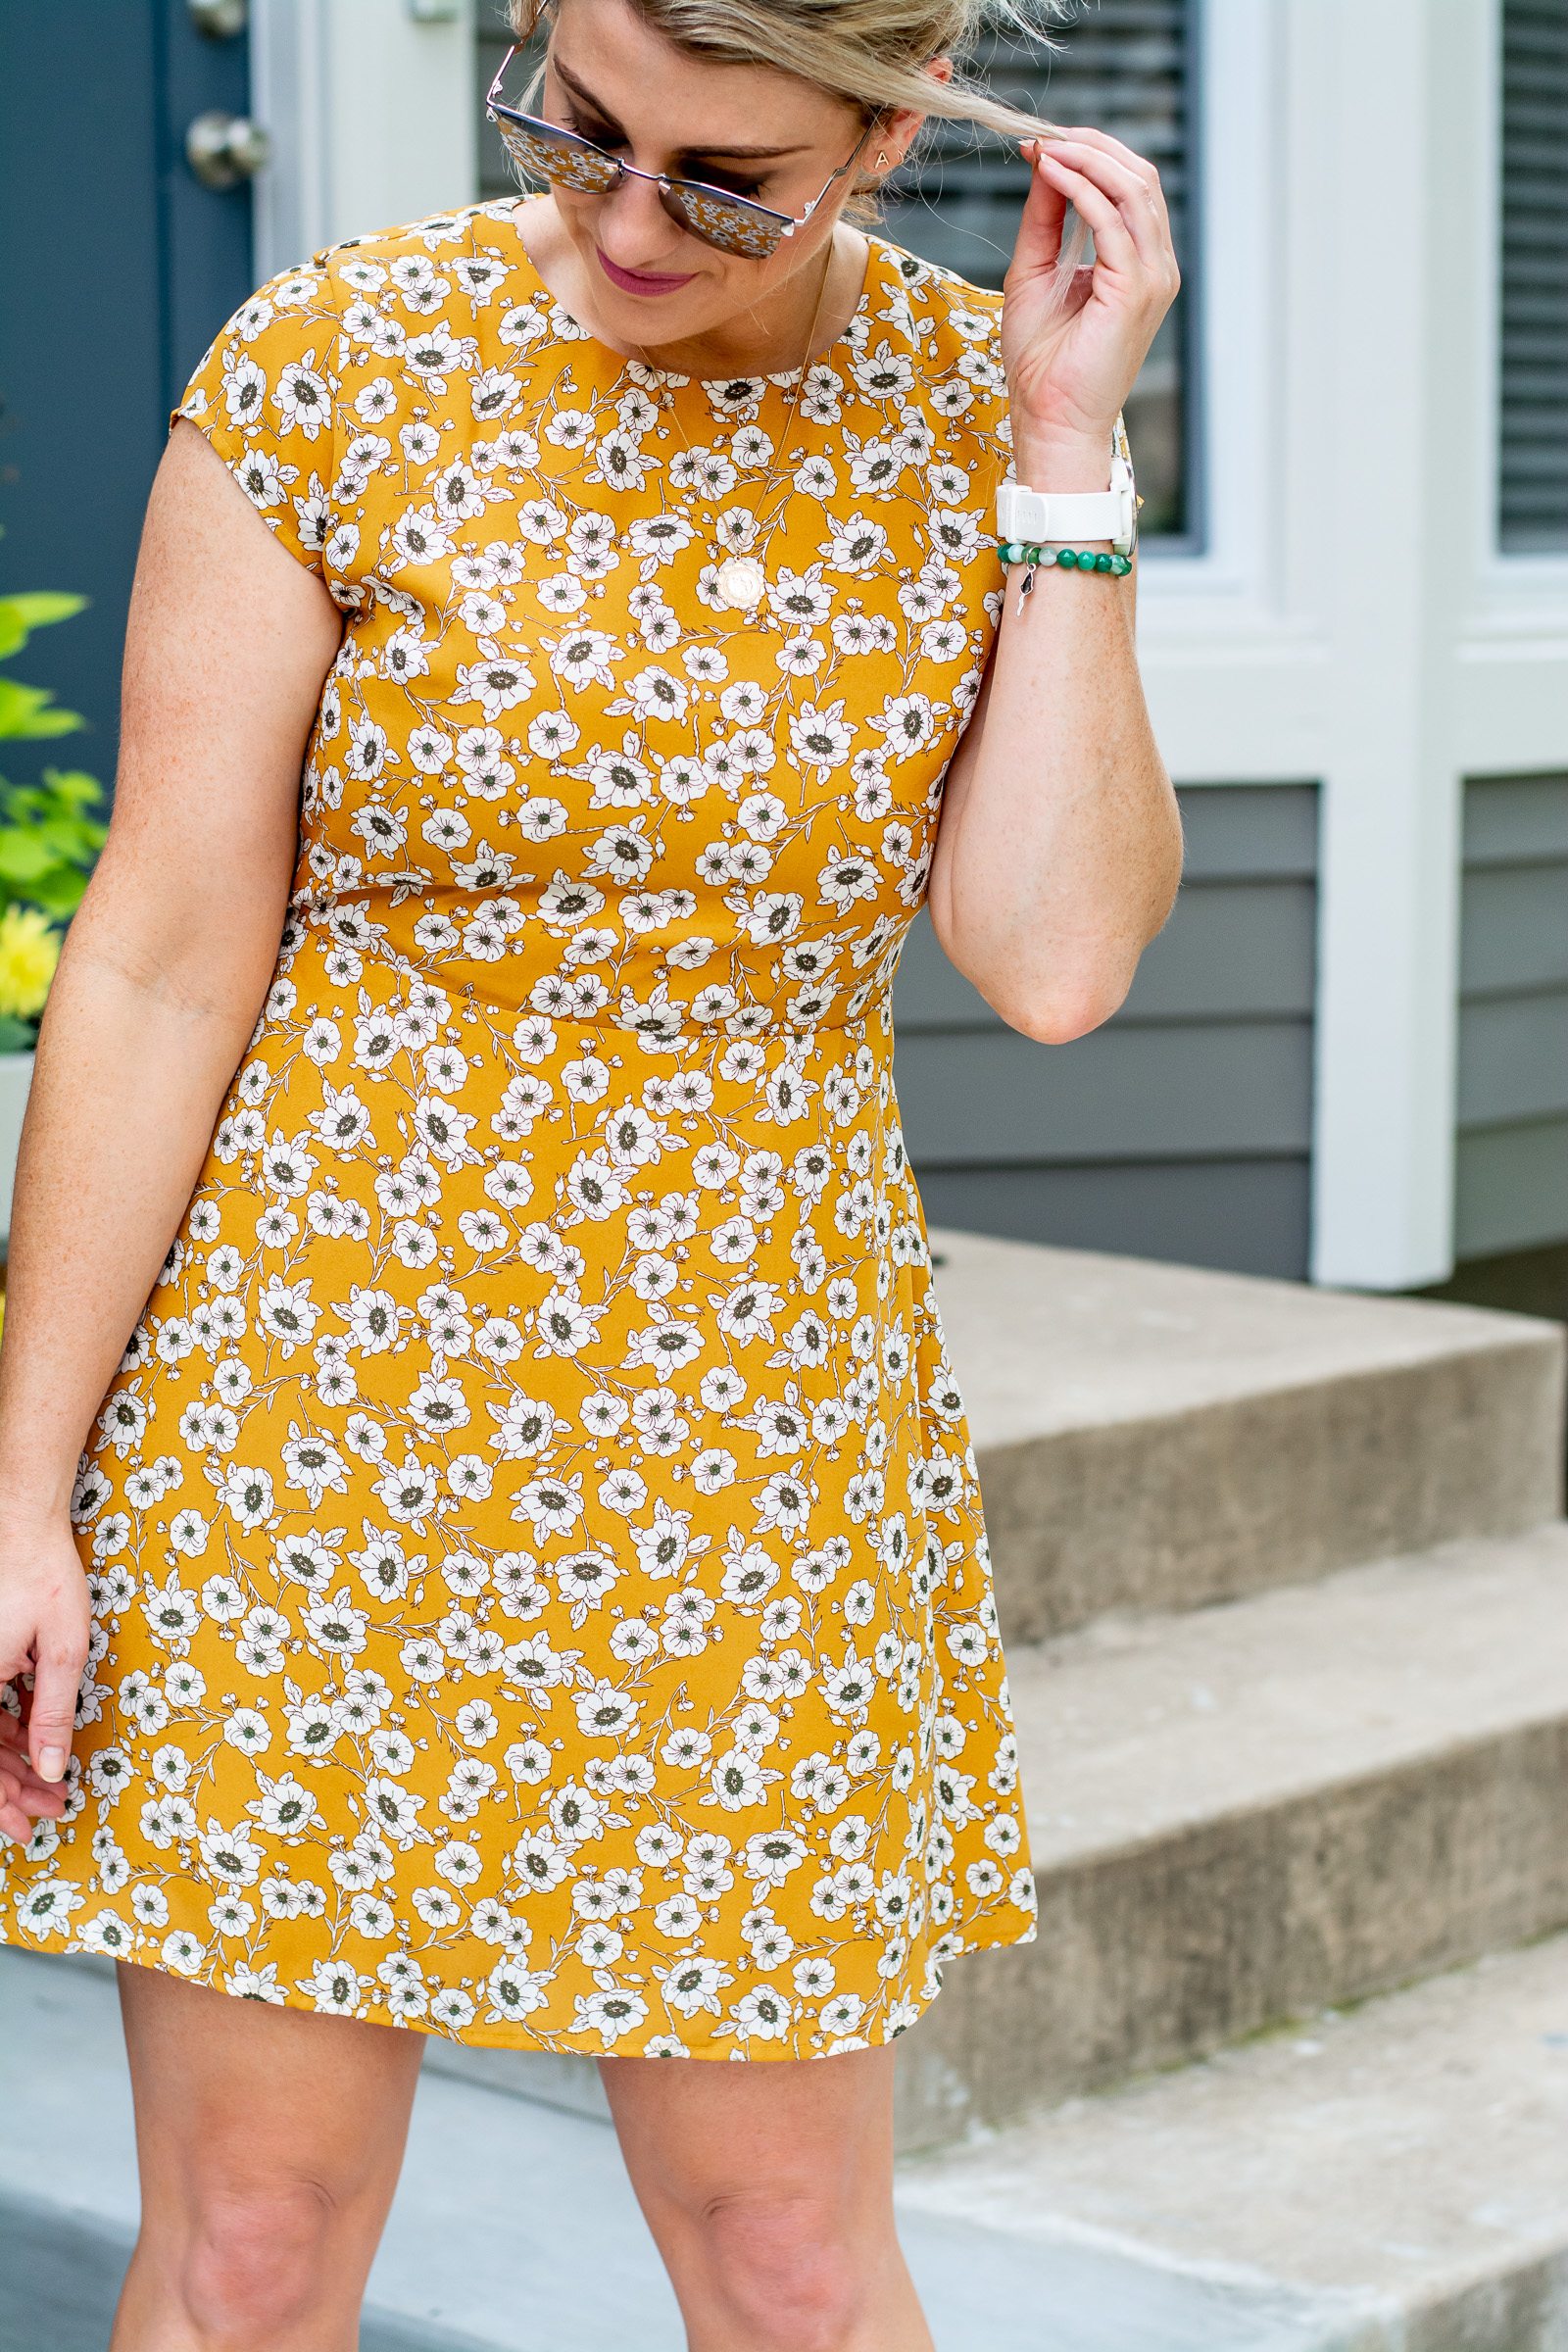 Mustard Floral Dress for Late Summer. | LSR